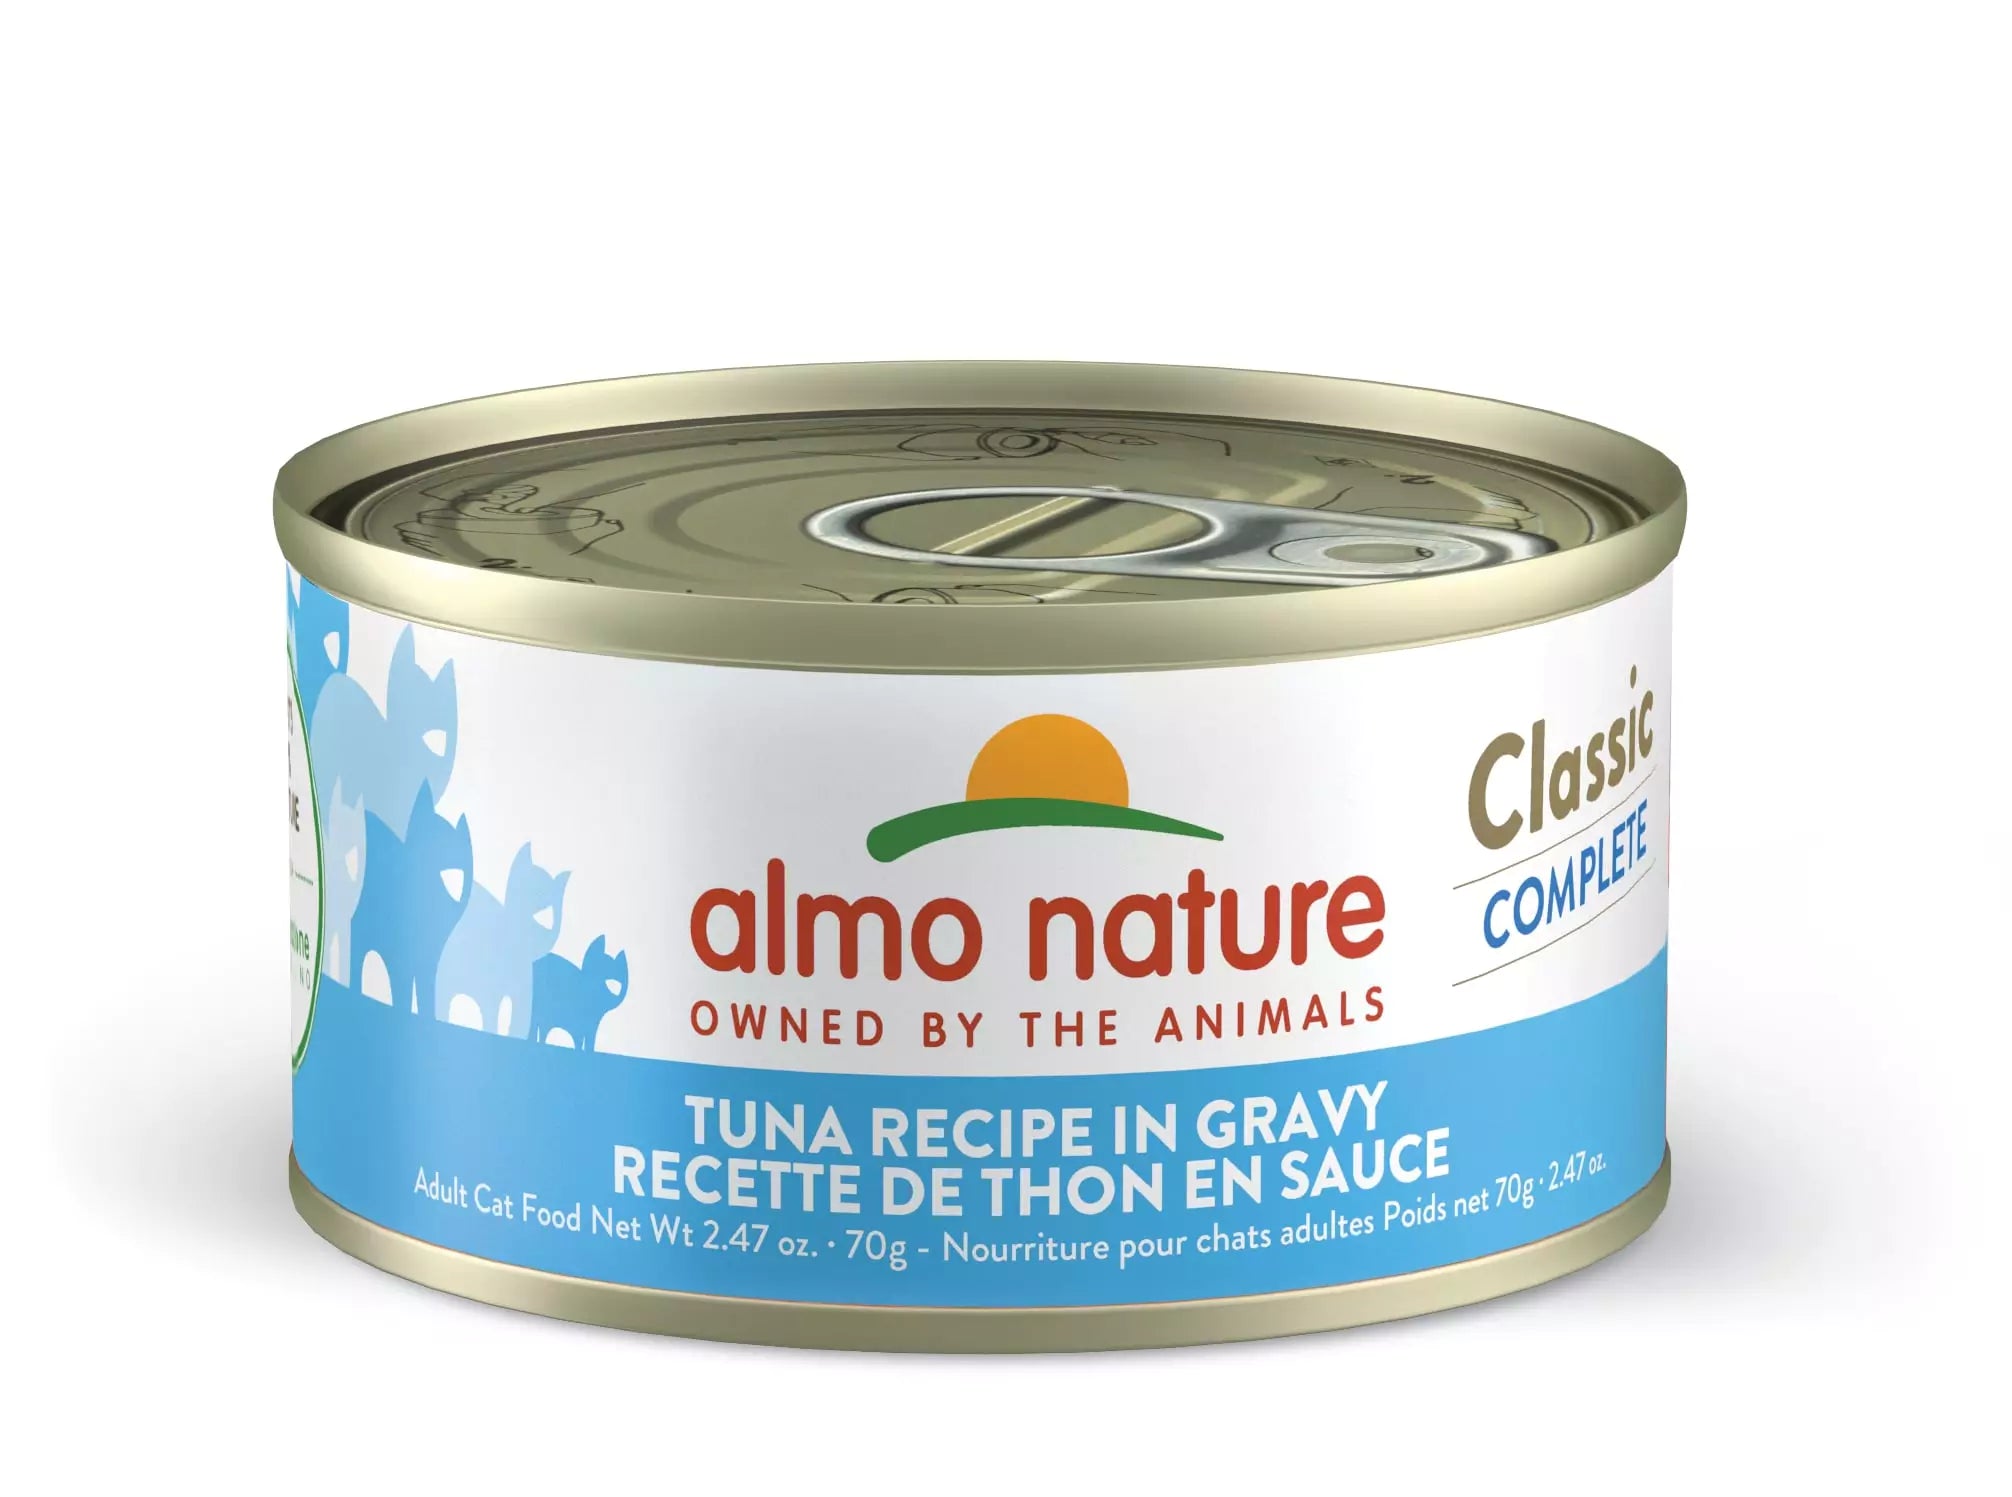 Almo Nature - Classic Complete - Tuna Recipe In Gravy (Wet Cat Food)